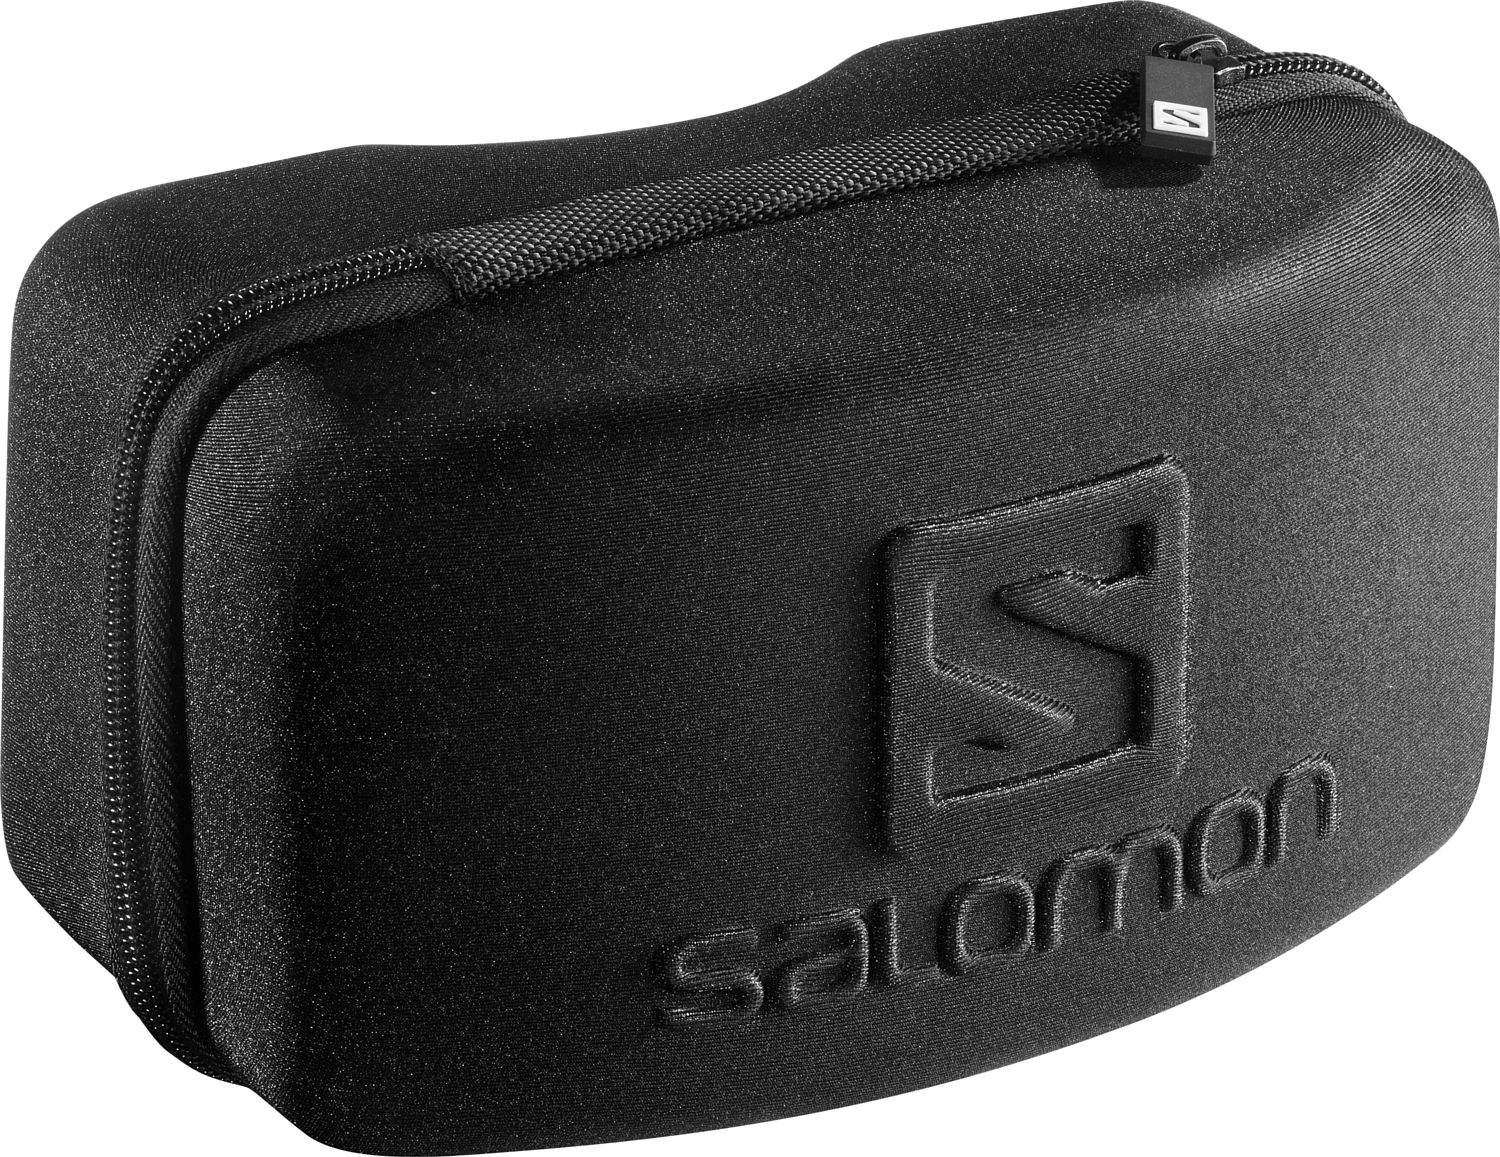 Очки горнолыжные SALOMON 2019-20 S/max black/solar black